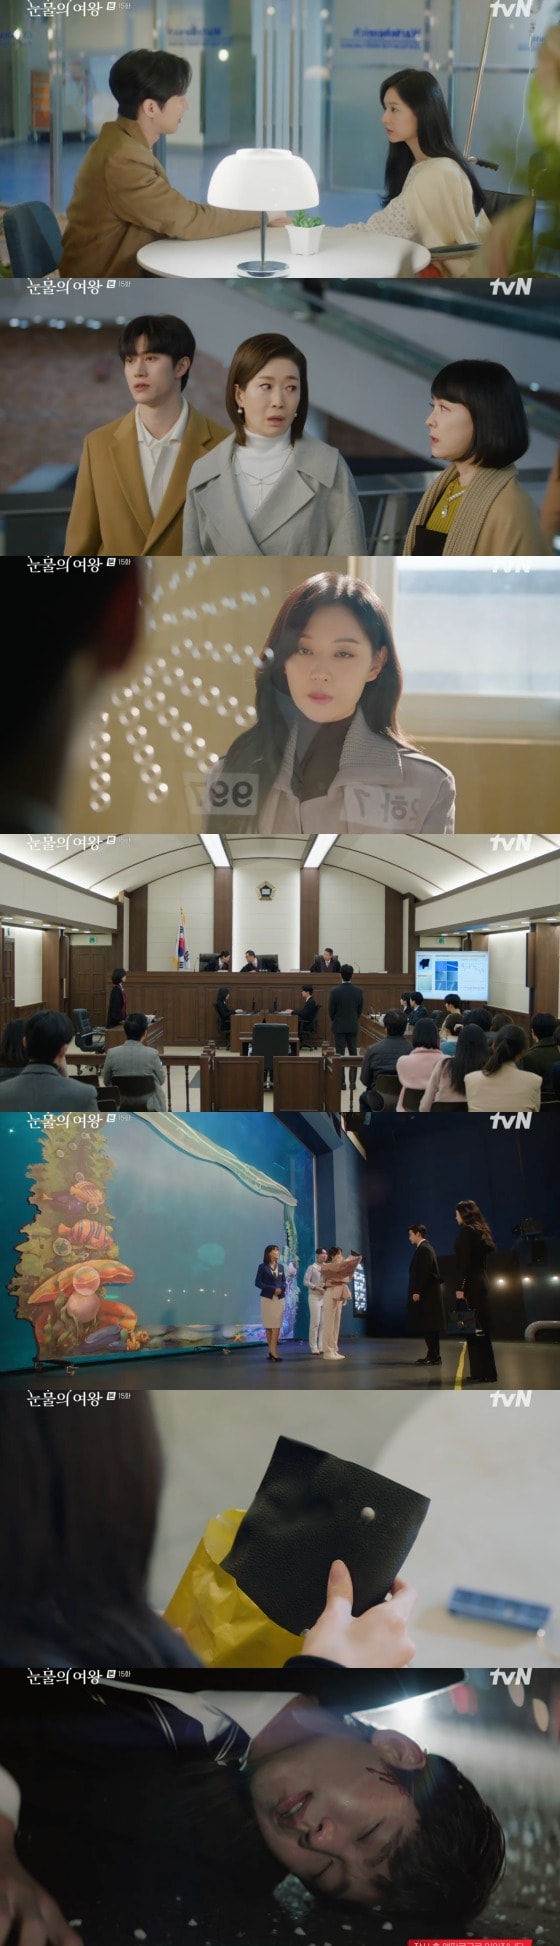  tvN '눈물의 여왕' 방송 화면 캡처 